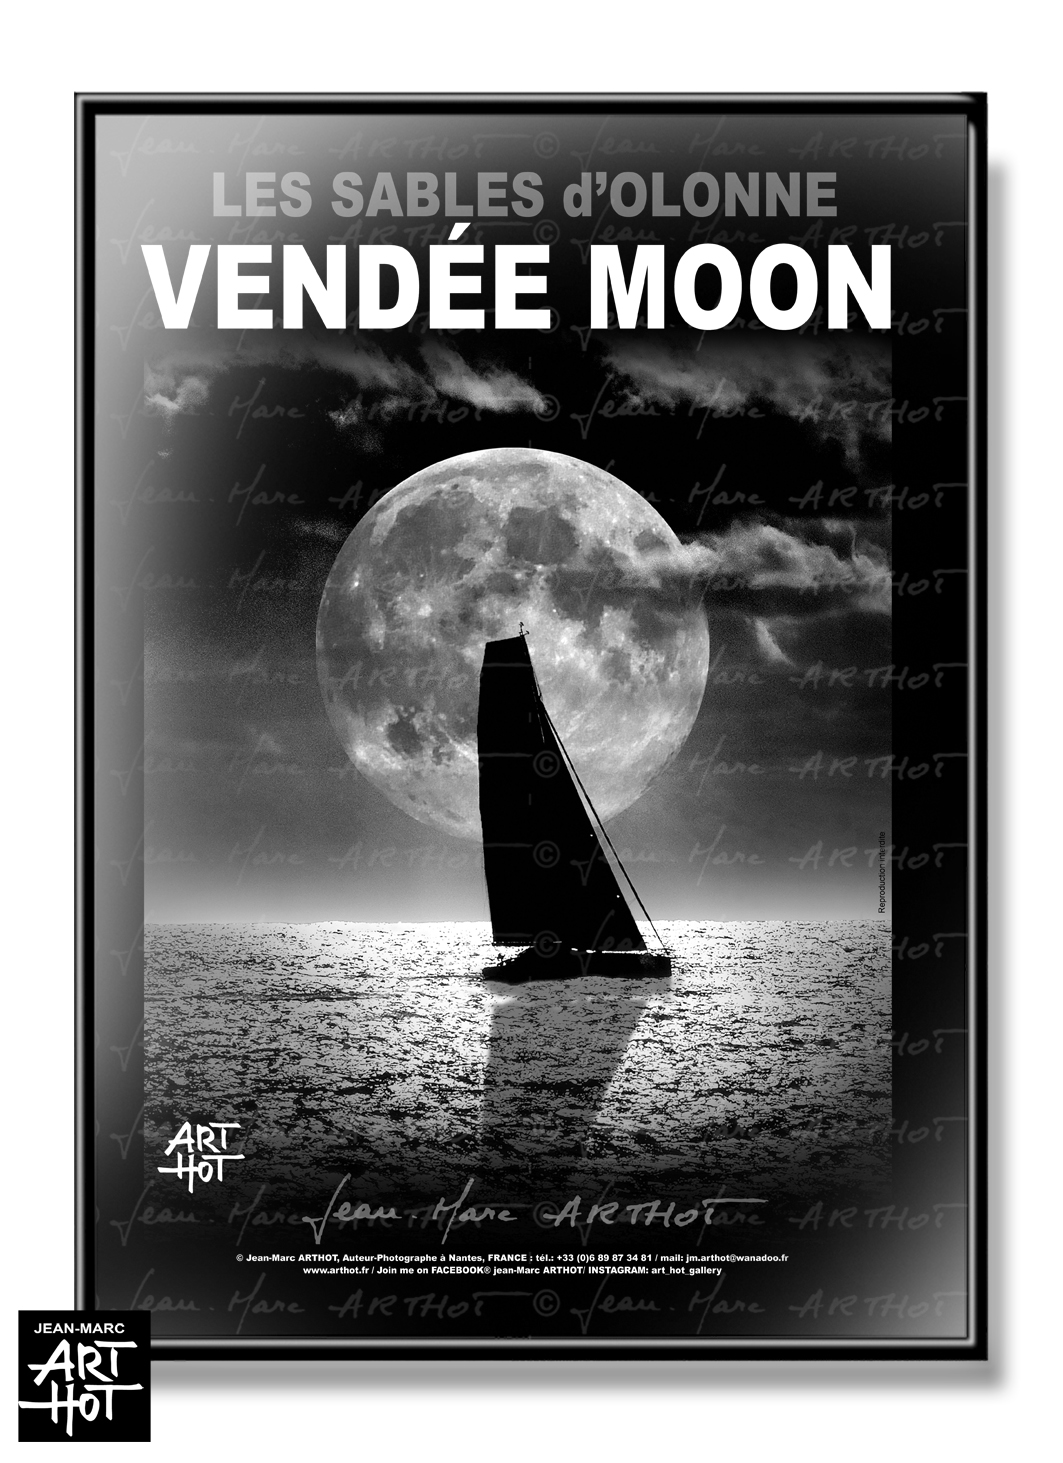 arthot-photo-art-b&amp;w-new-york-vendee-sables-olonne-newlessables-037-voilier-moon-lune-AFFICHE